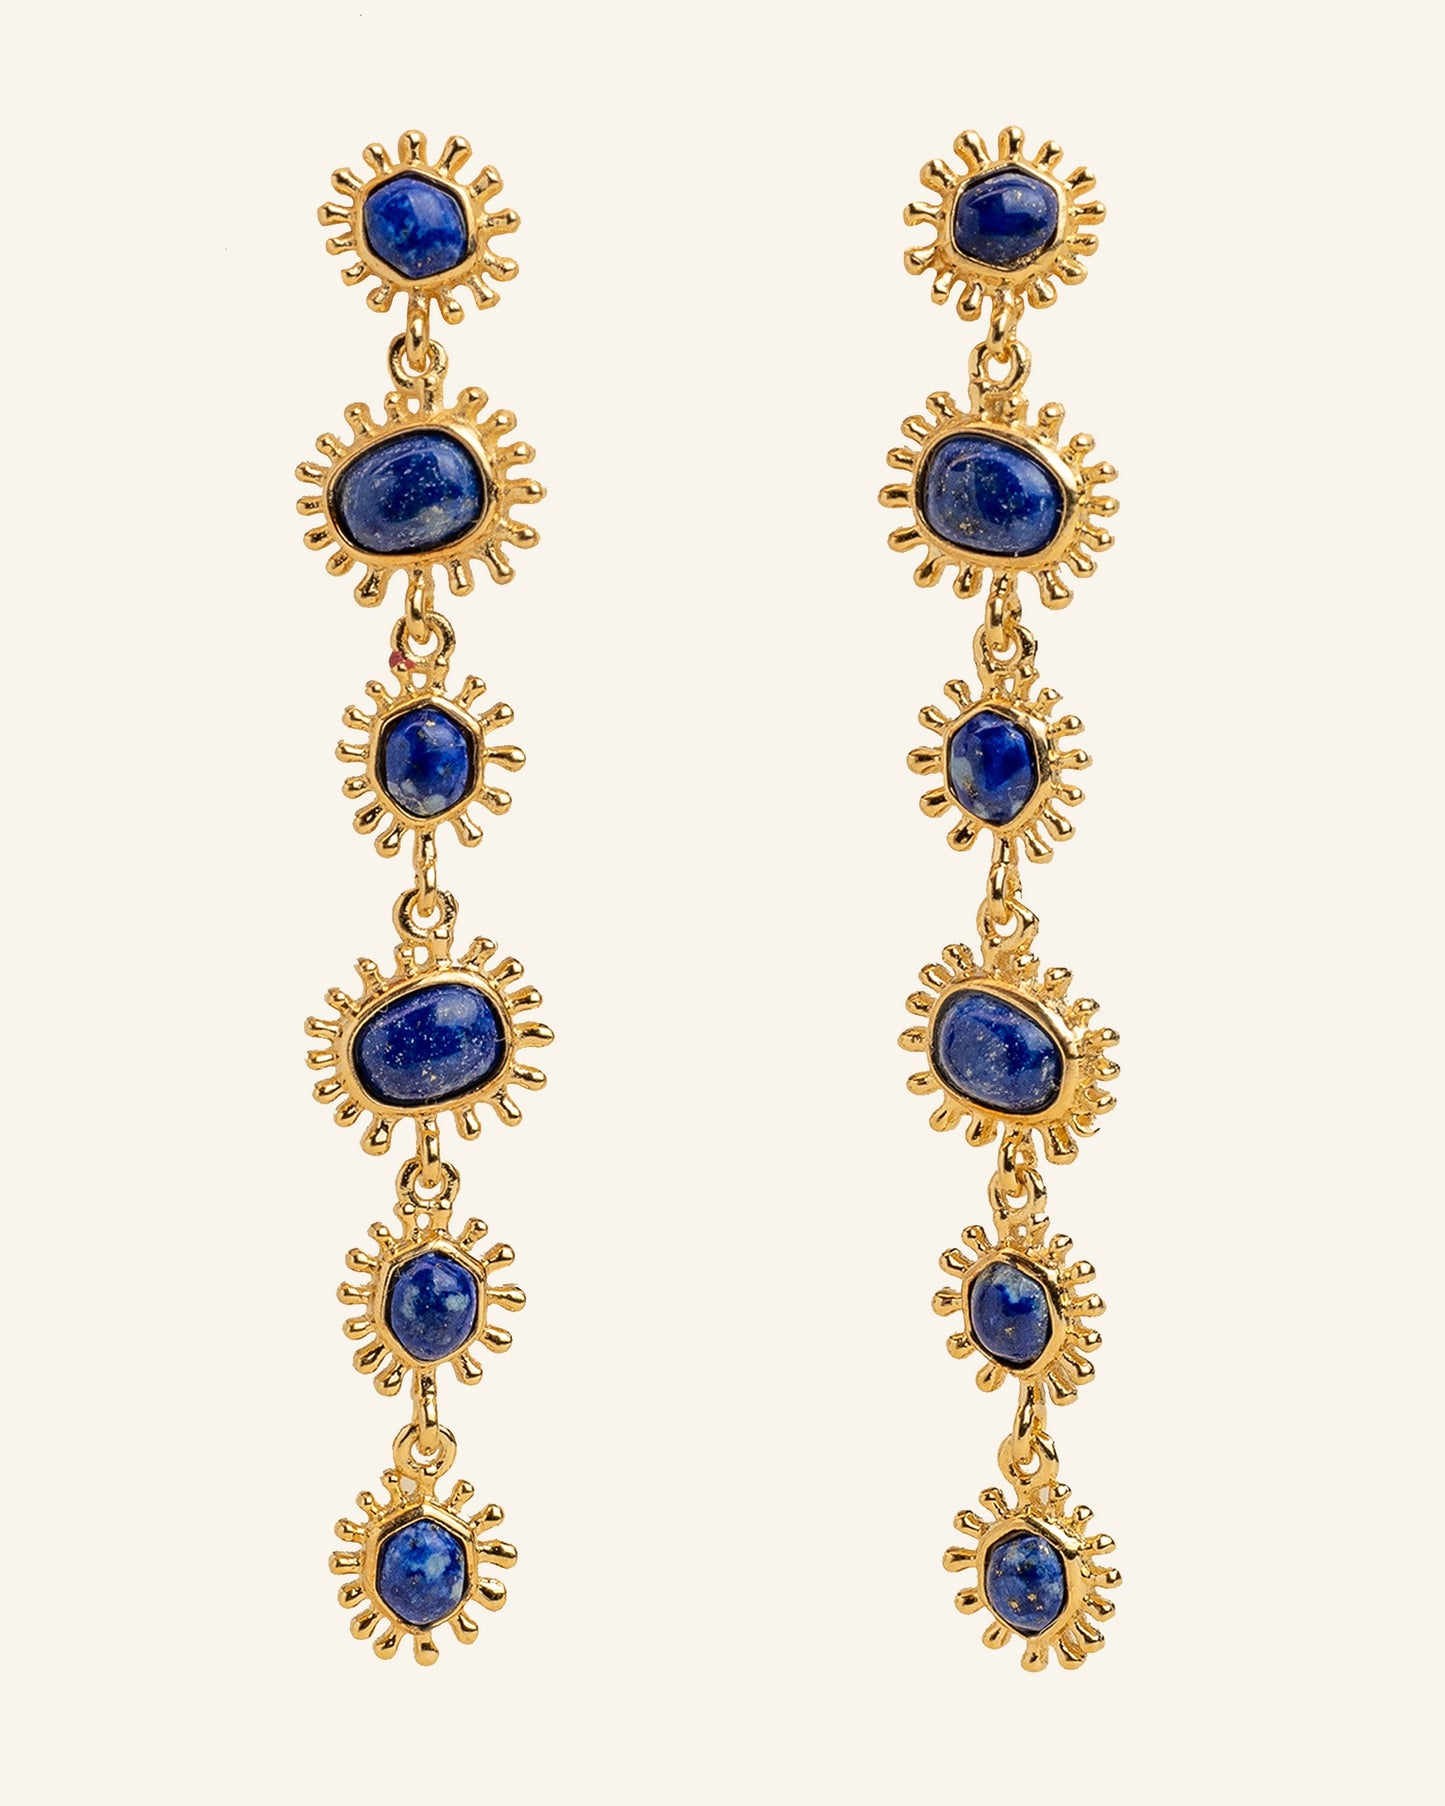 Horus earrings with lapis lazuli